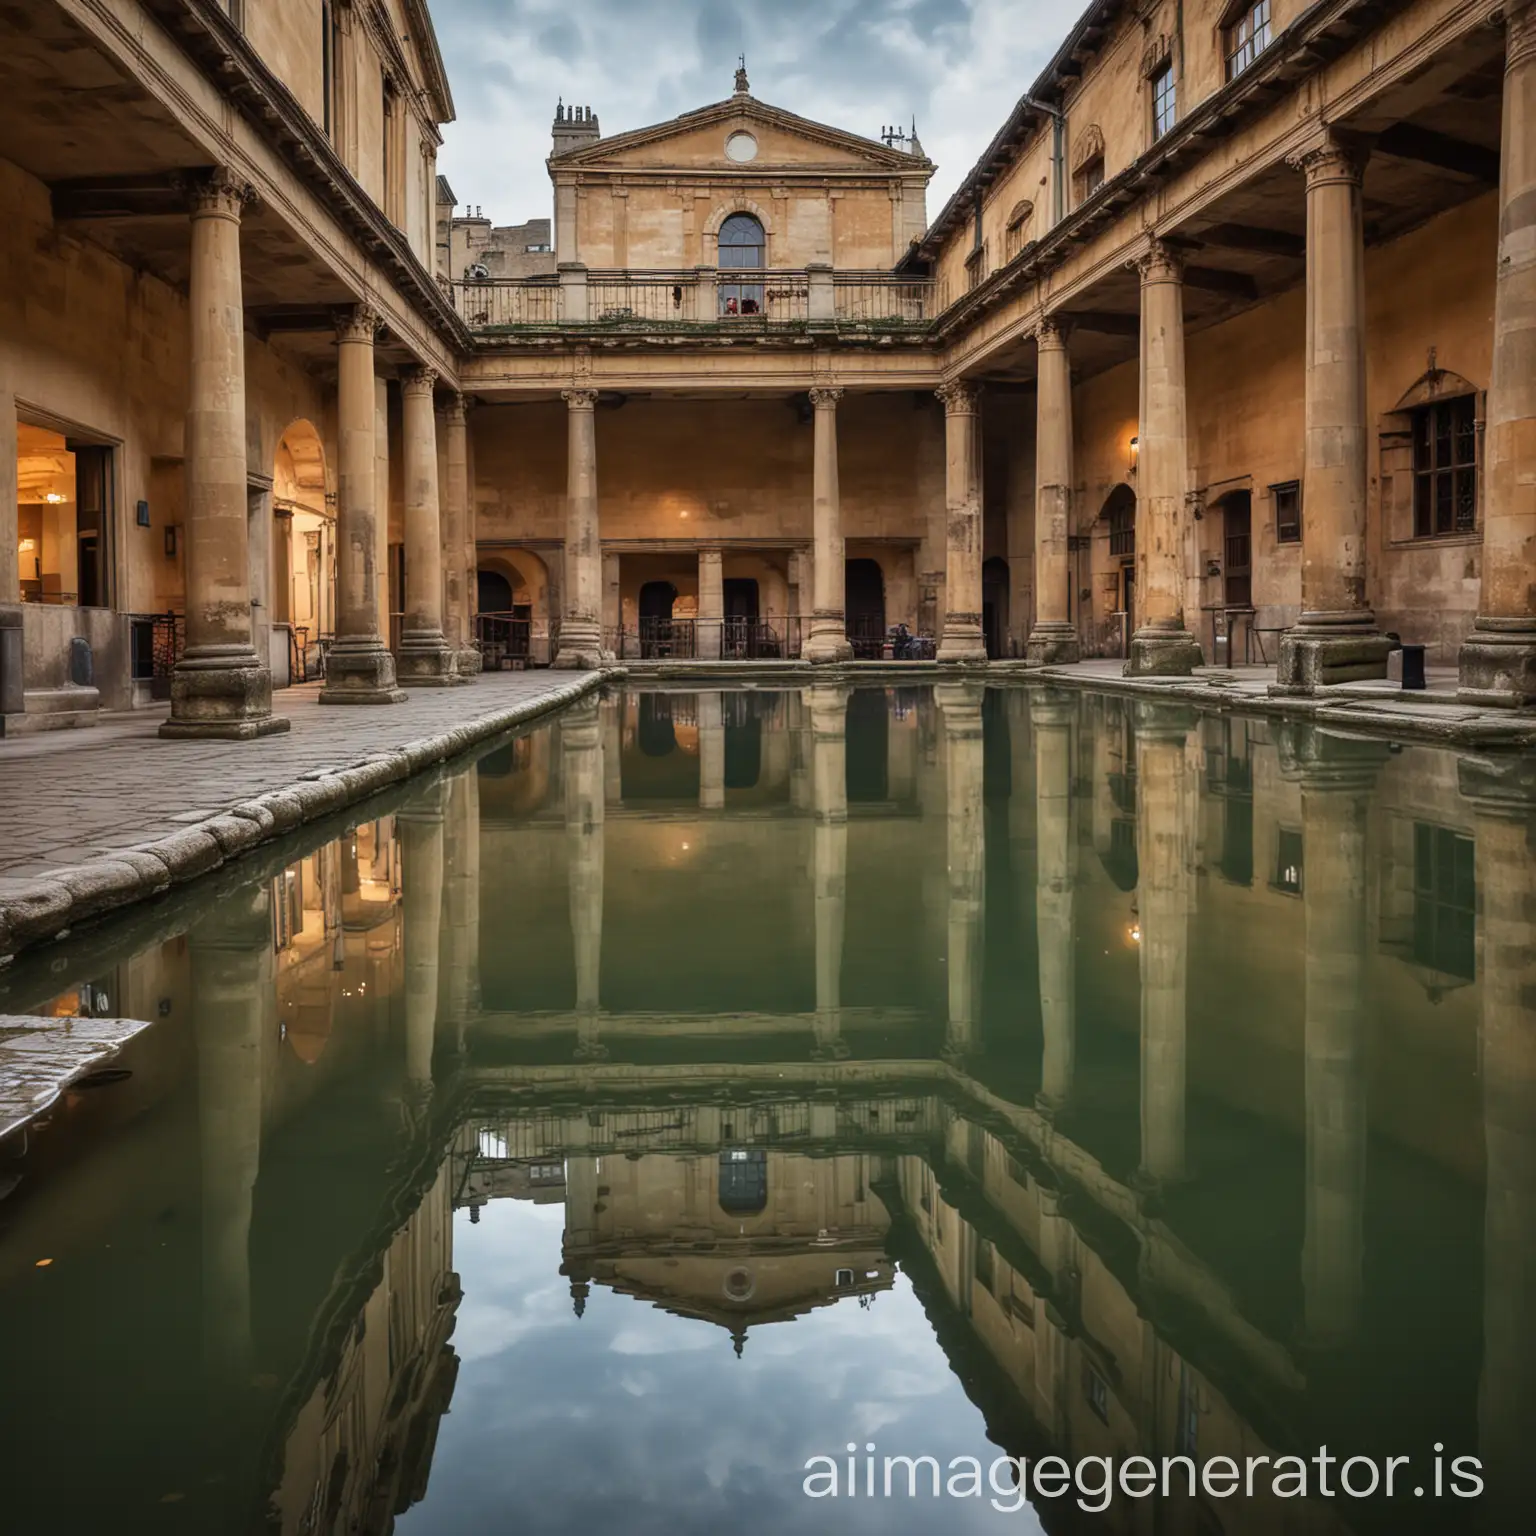 Serene-Roman-Baths-Georgian-Architecture-Reflection